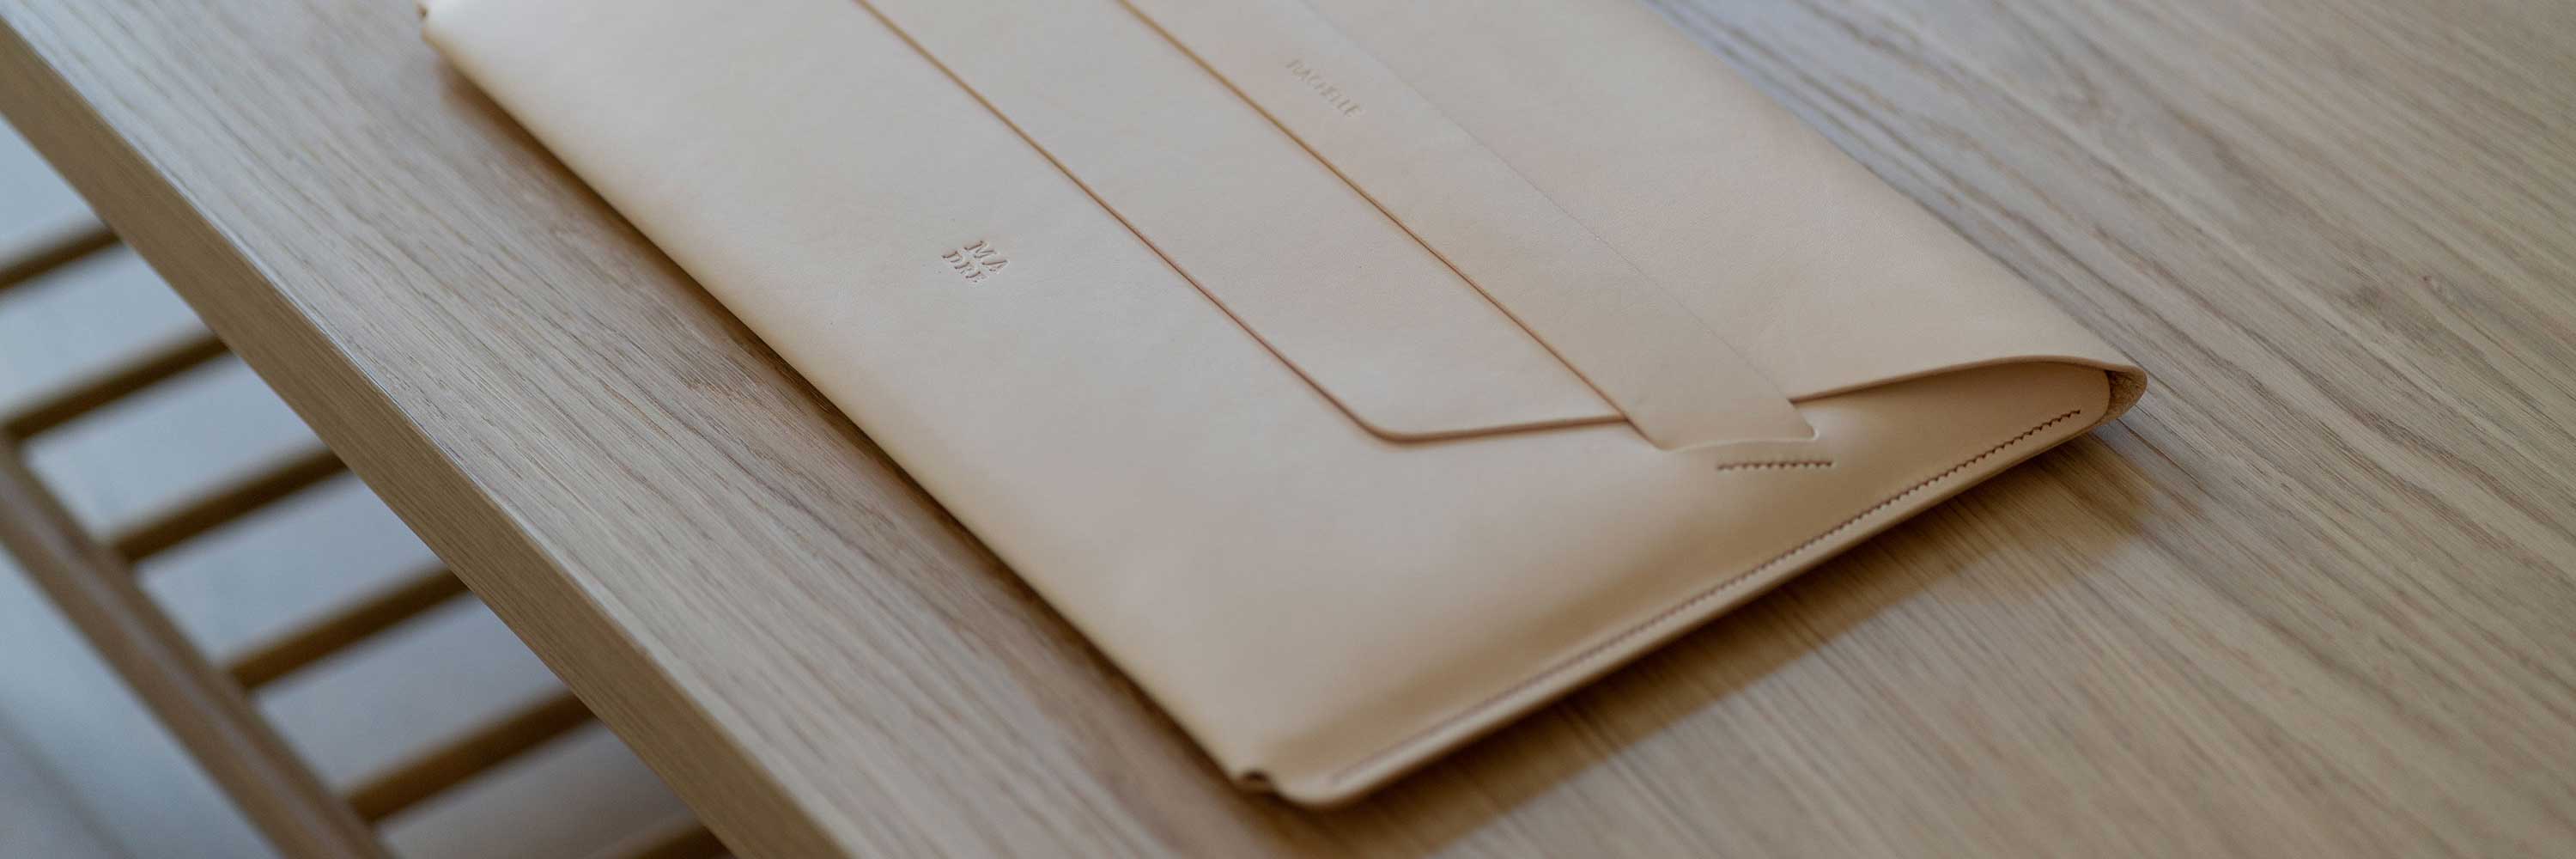 MacBook Sleeve Leather on table natural Color Atelier Madre Manuel Dreesmann Barcelona Spain